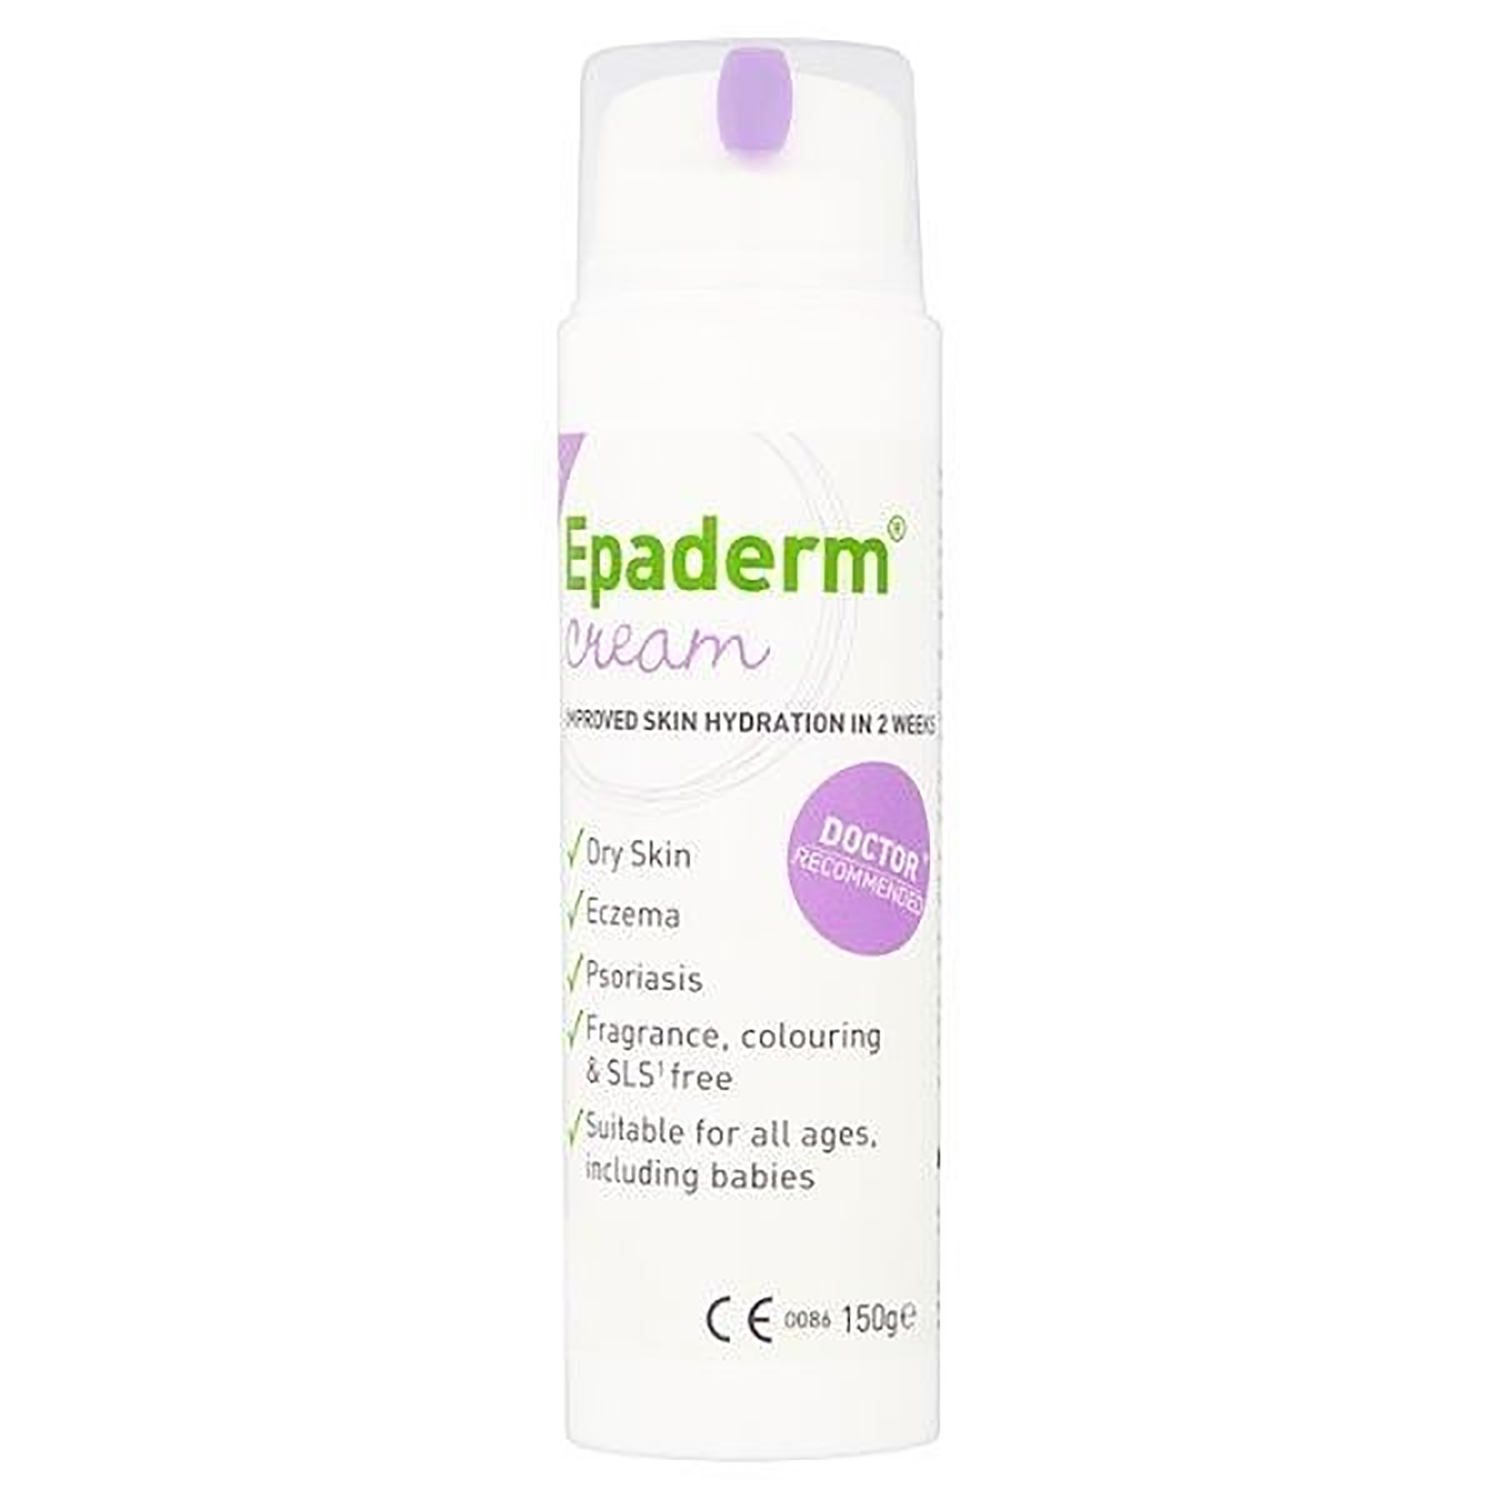 Epaderm Cream | 150g | Single